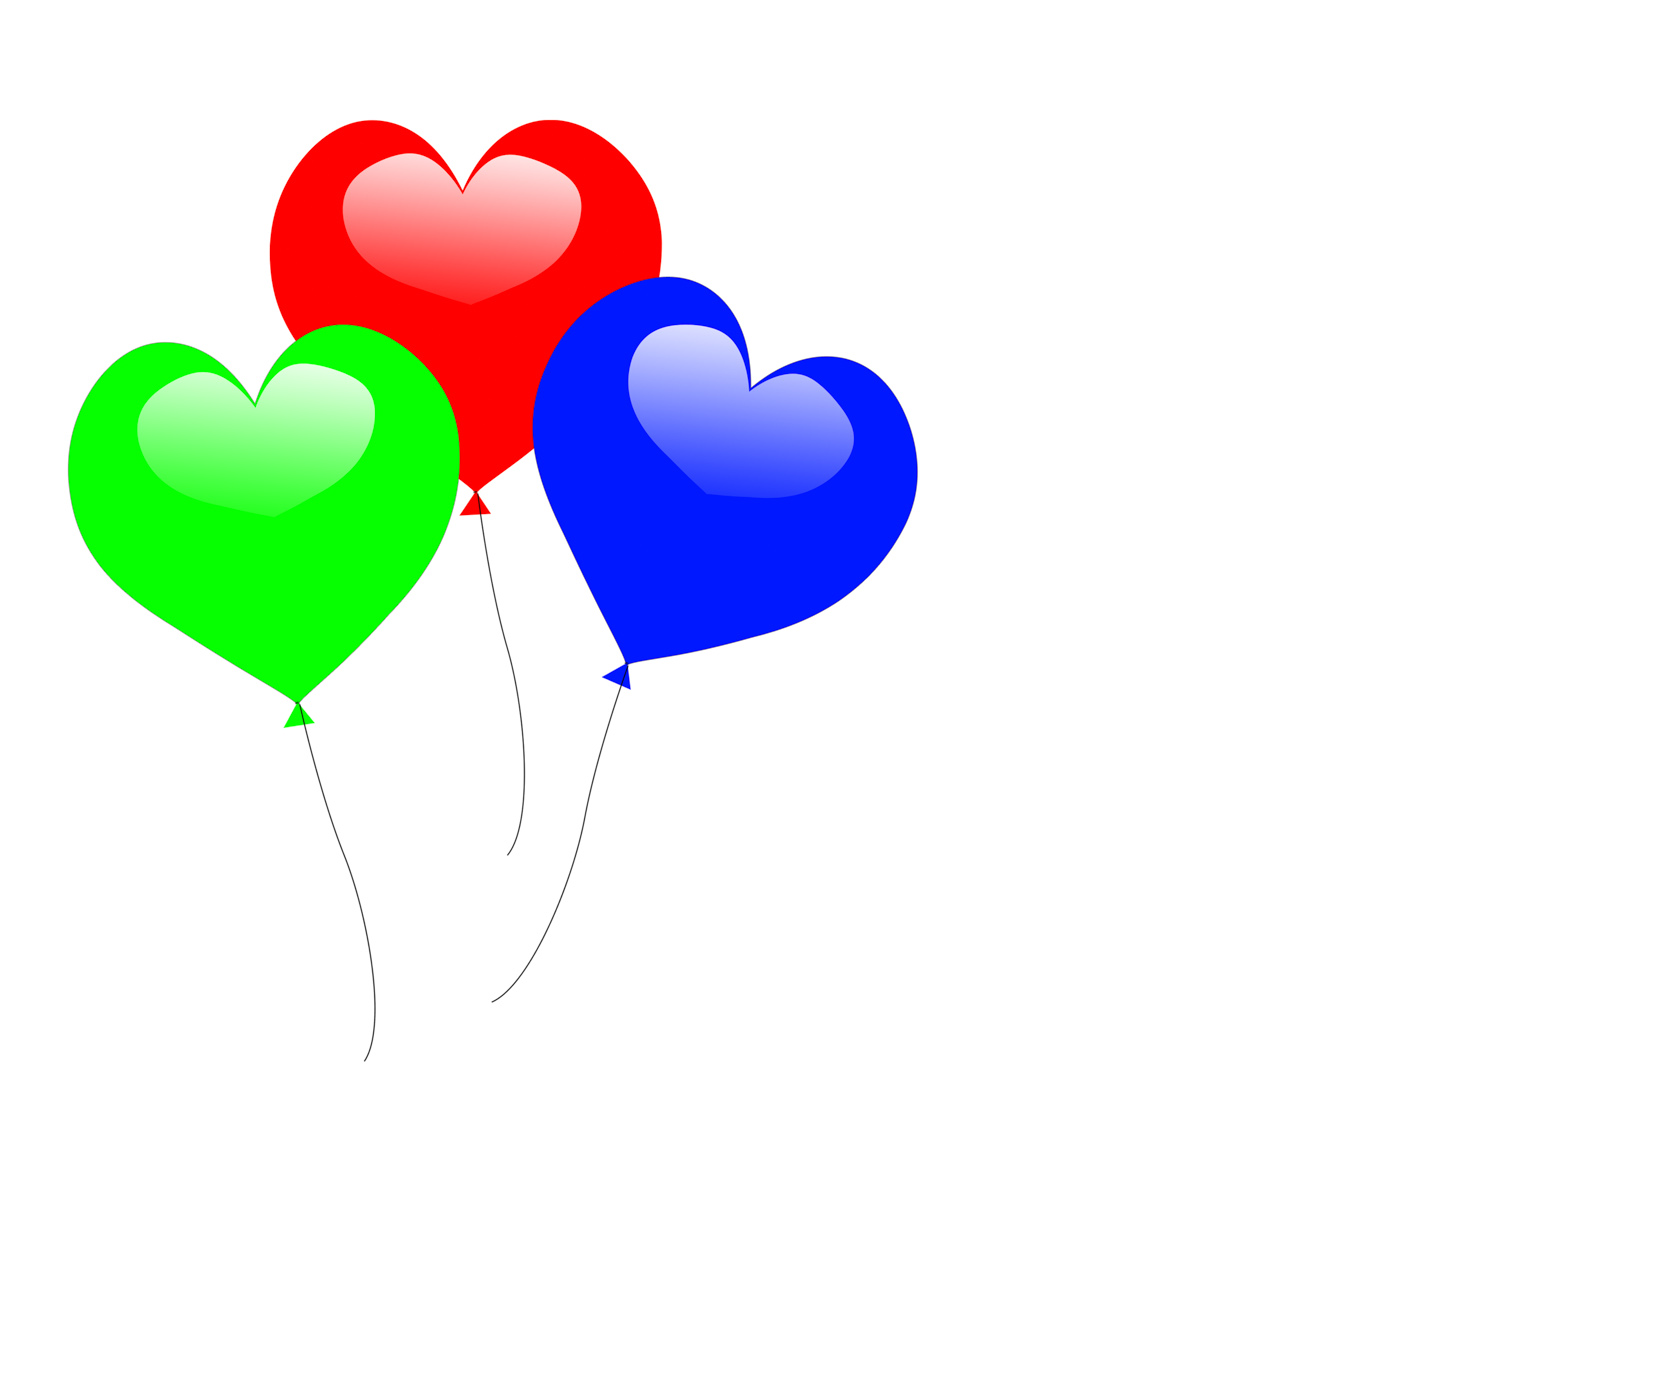 Colourful heart balloons show romantic anniversary celebration photo